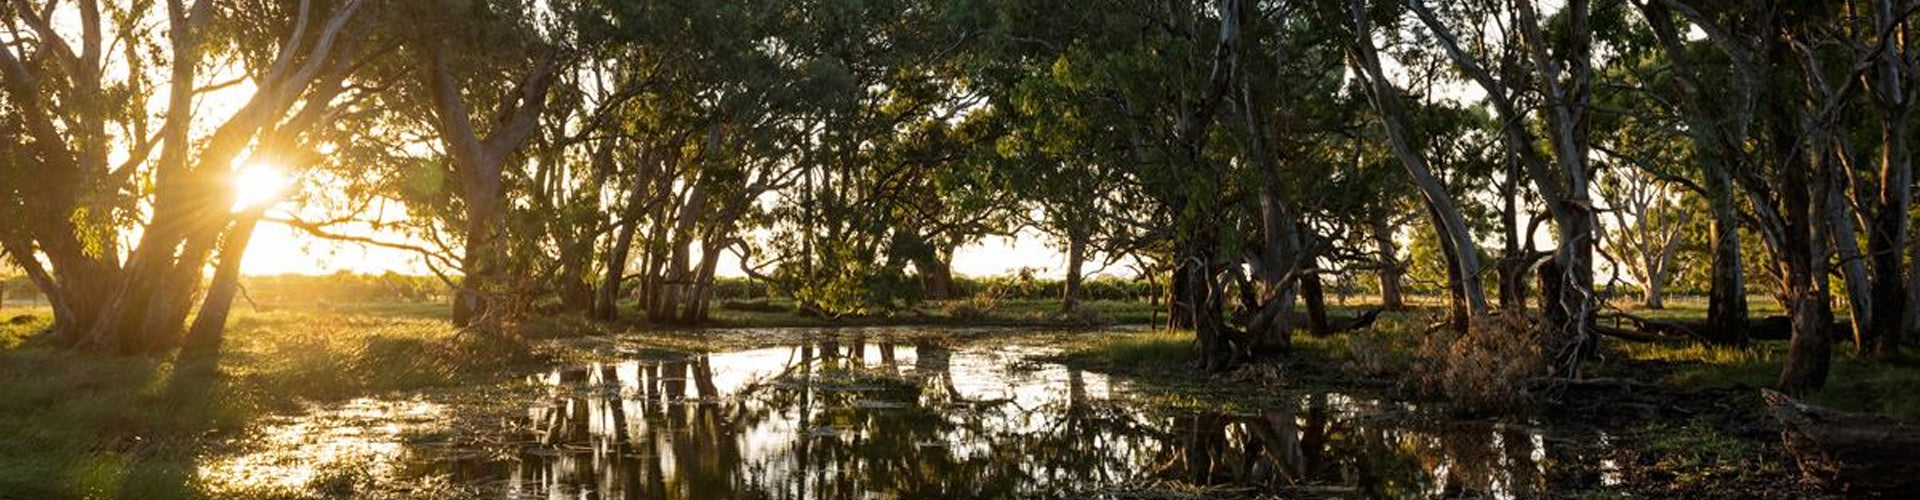 Langhorne Creek South Australia